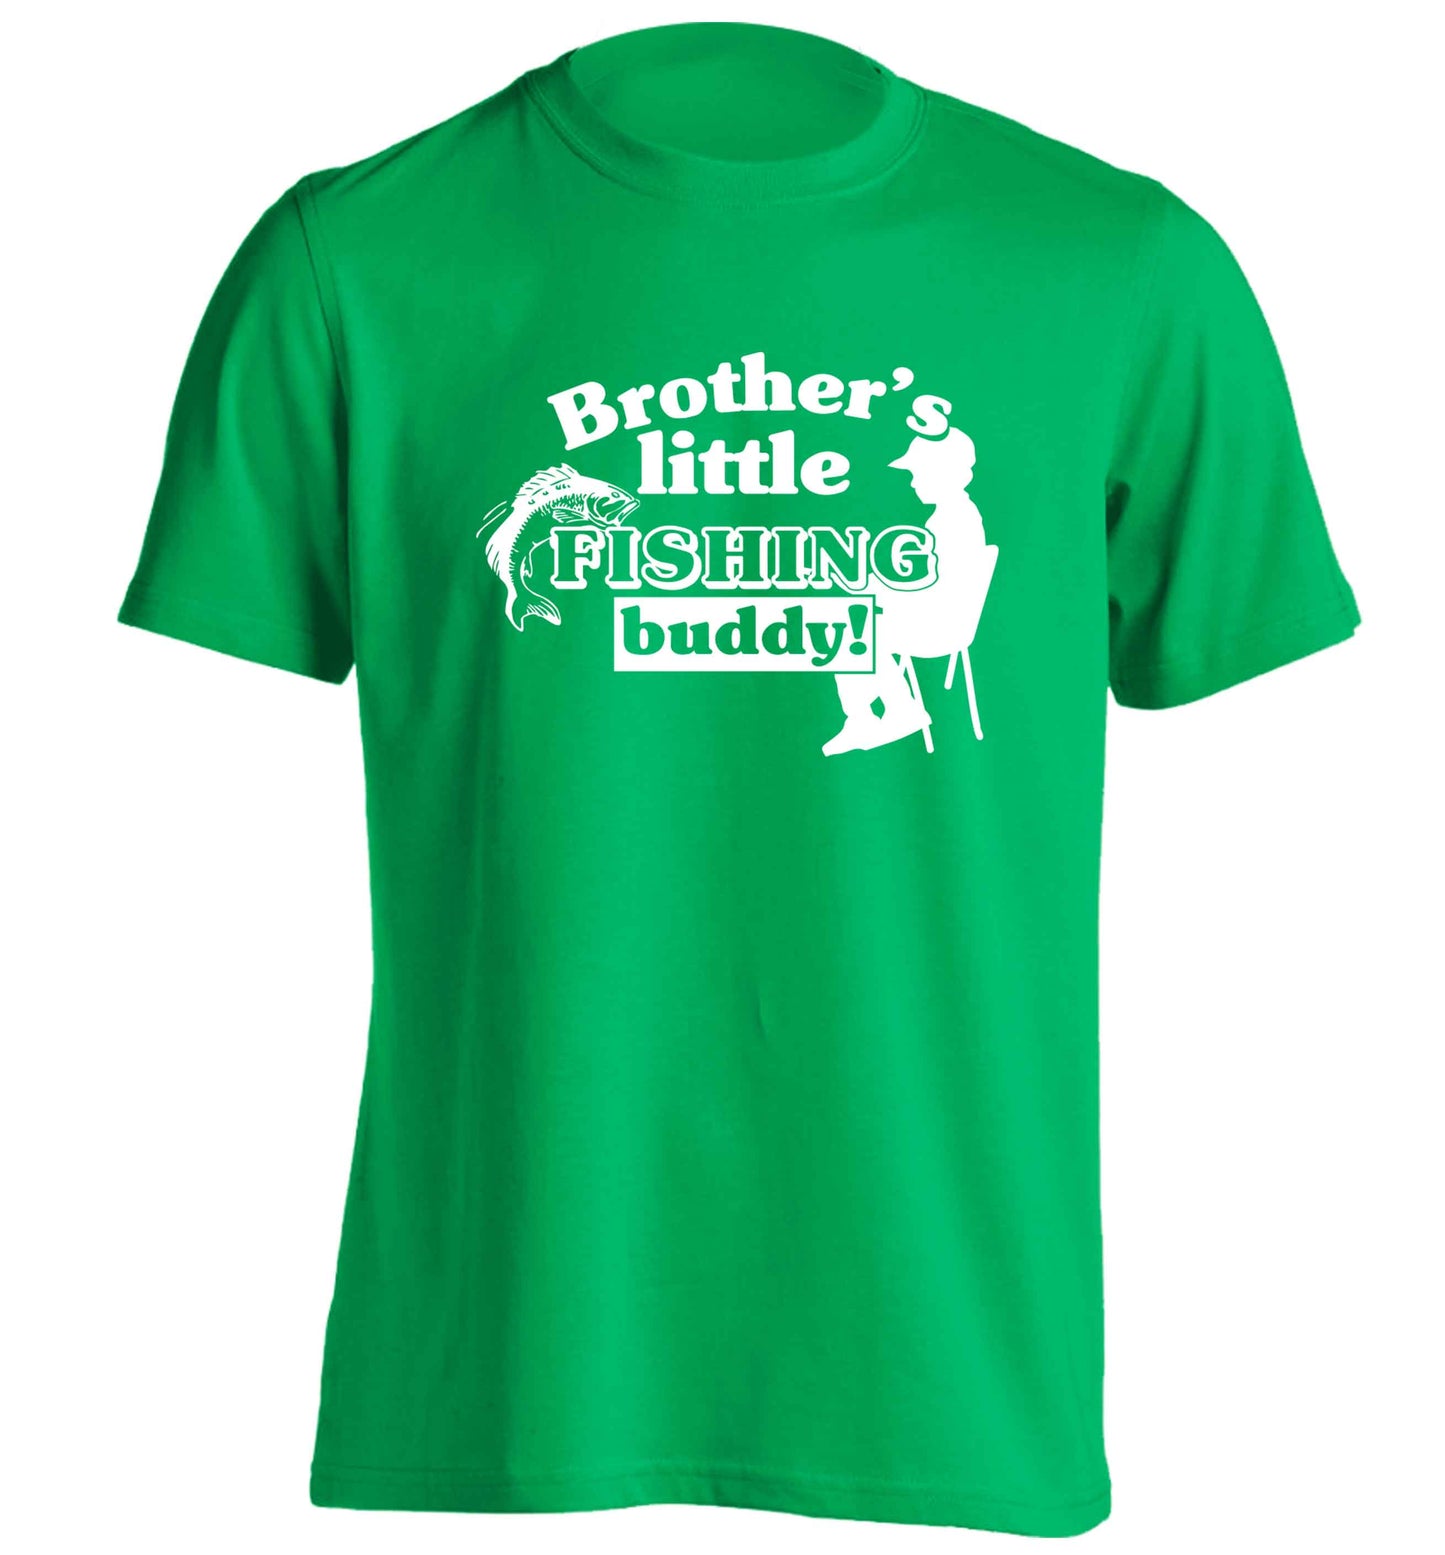 Brother's little fishing buddy adults unisex green Tshirt 2XL